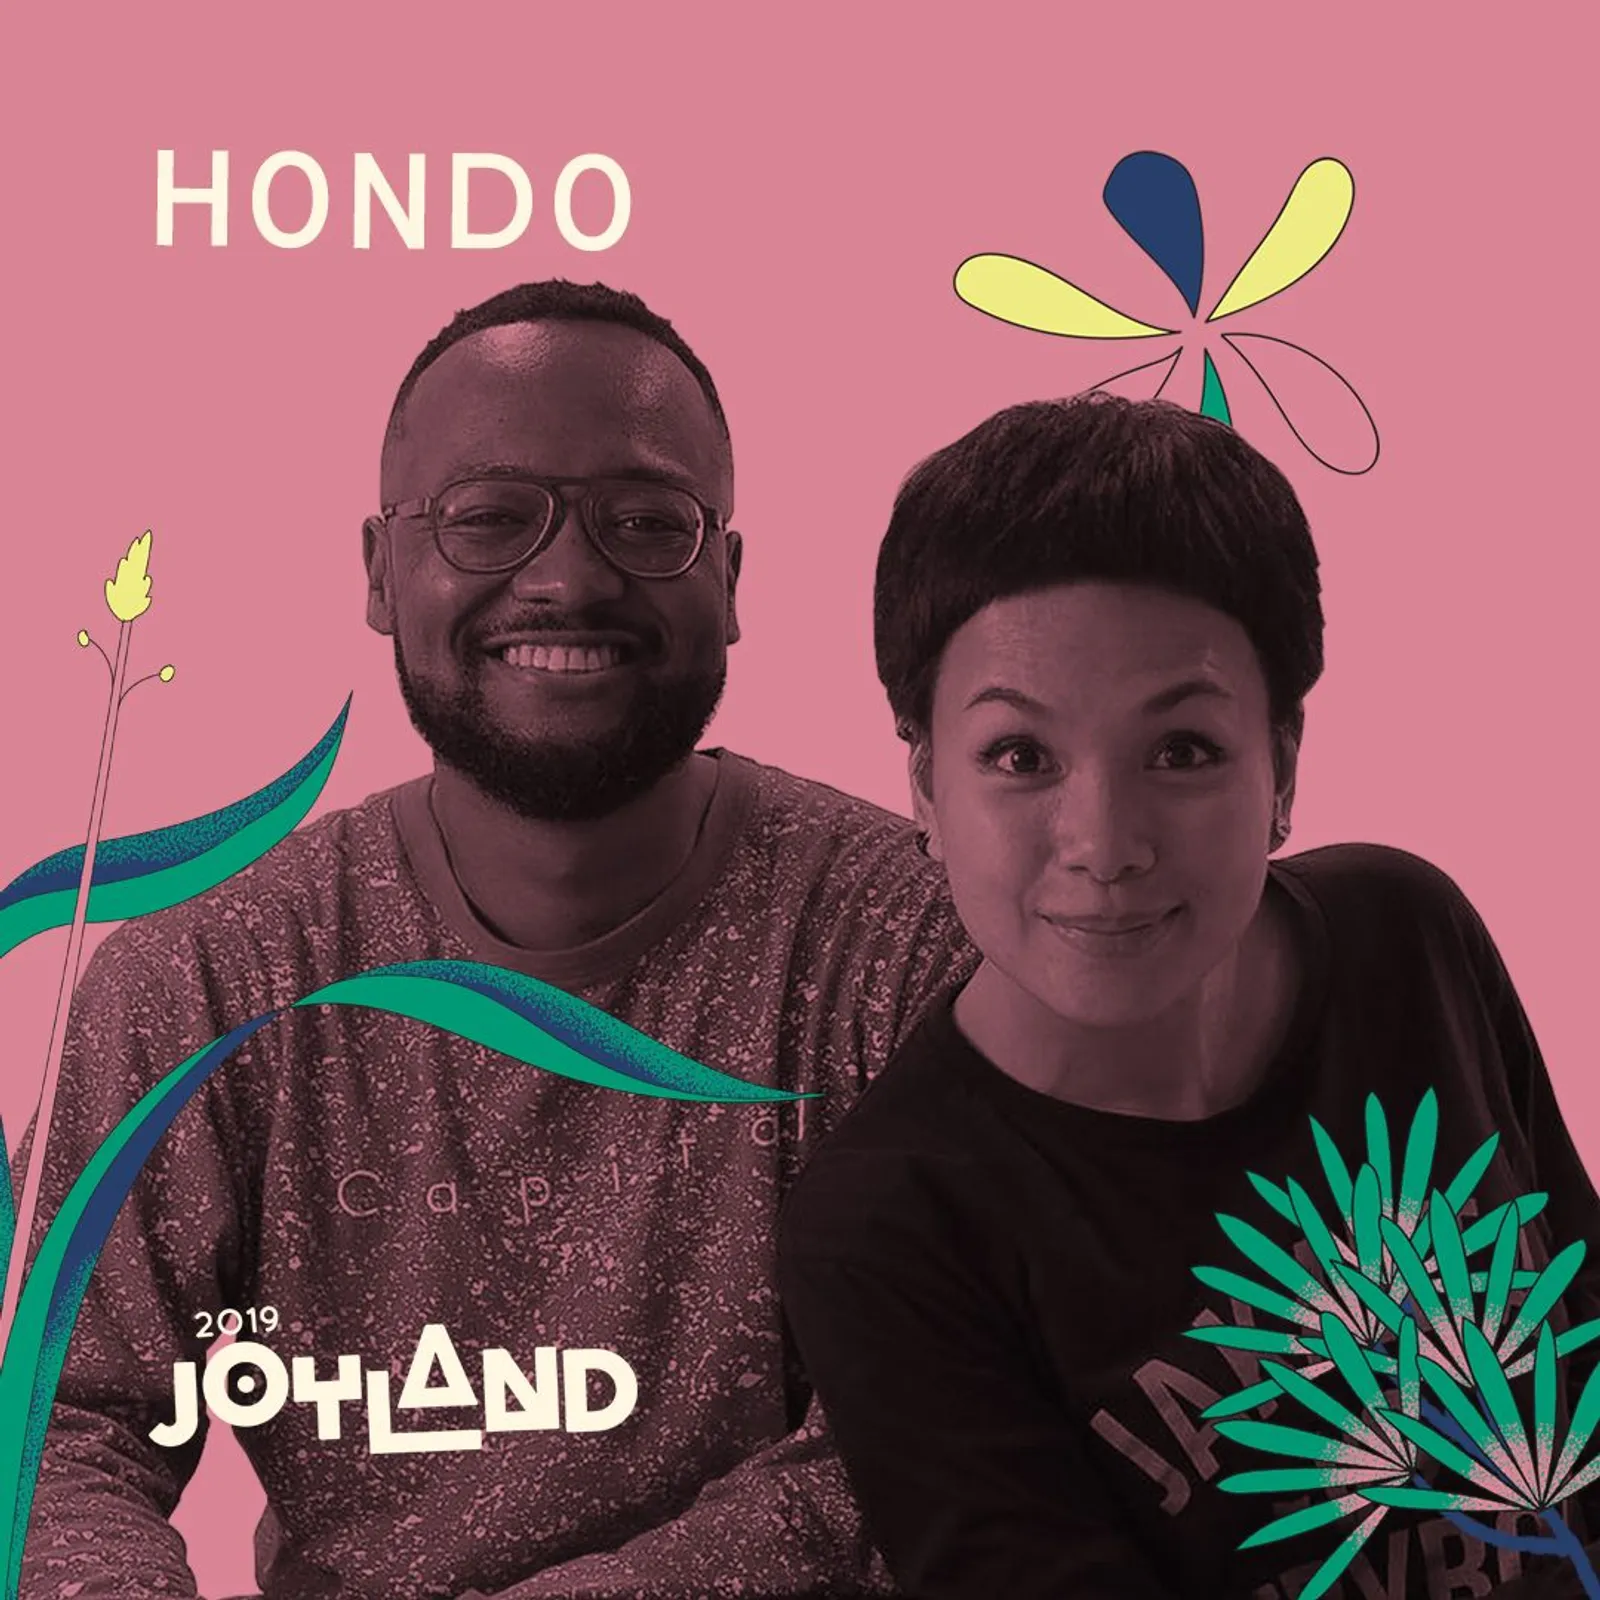 Simak Menu Joyland Festival 2019:
Sudah Komplit! 